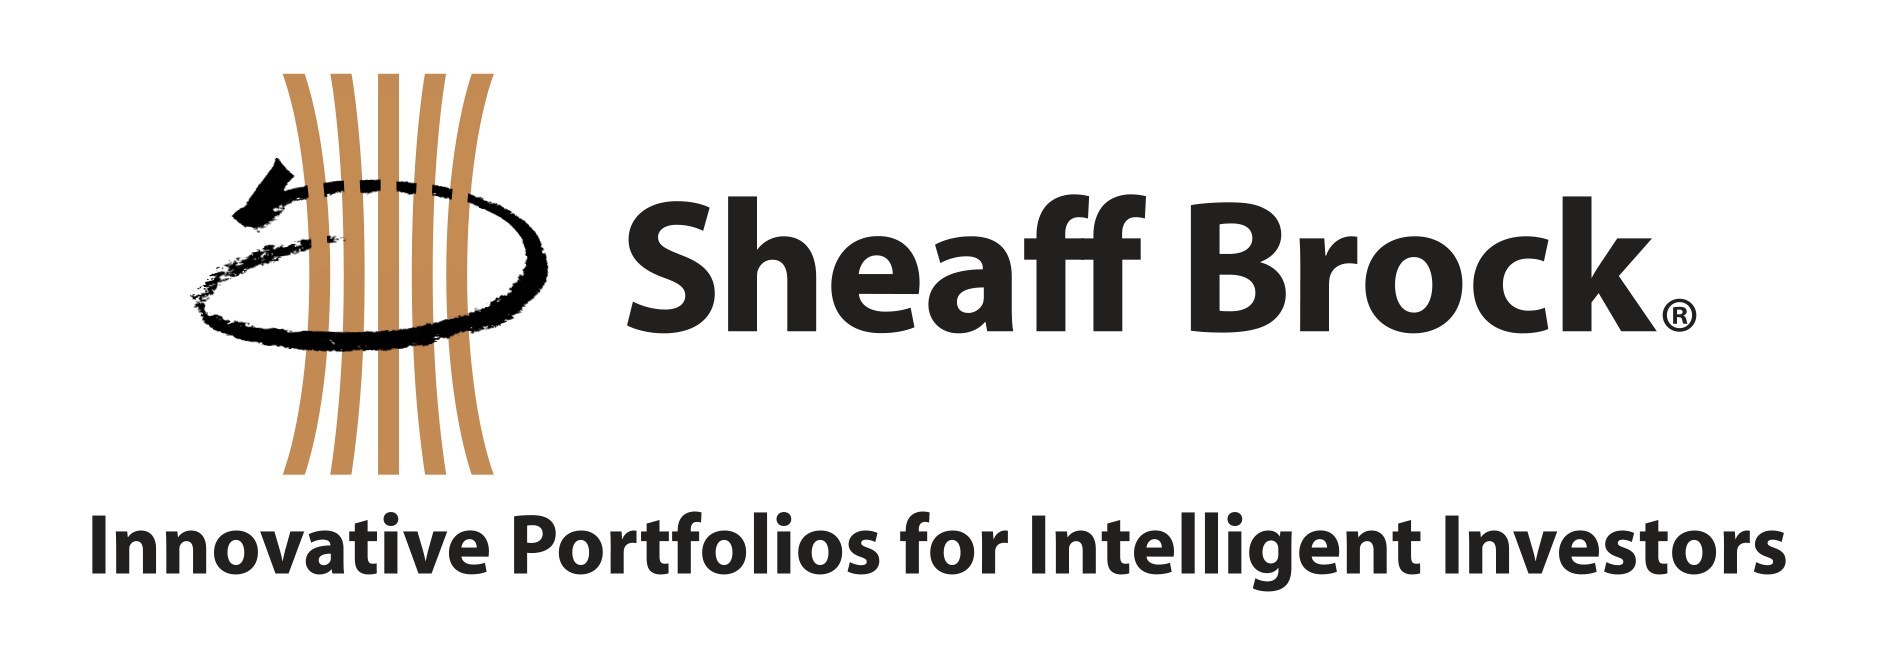 Sheaff Brock Investment Advisors (PRNewsfoto/Sheaff Brock Investment Advisor)